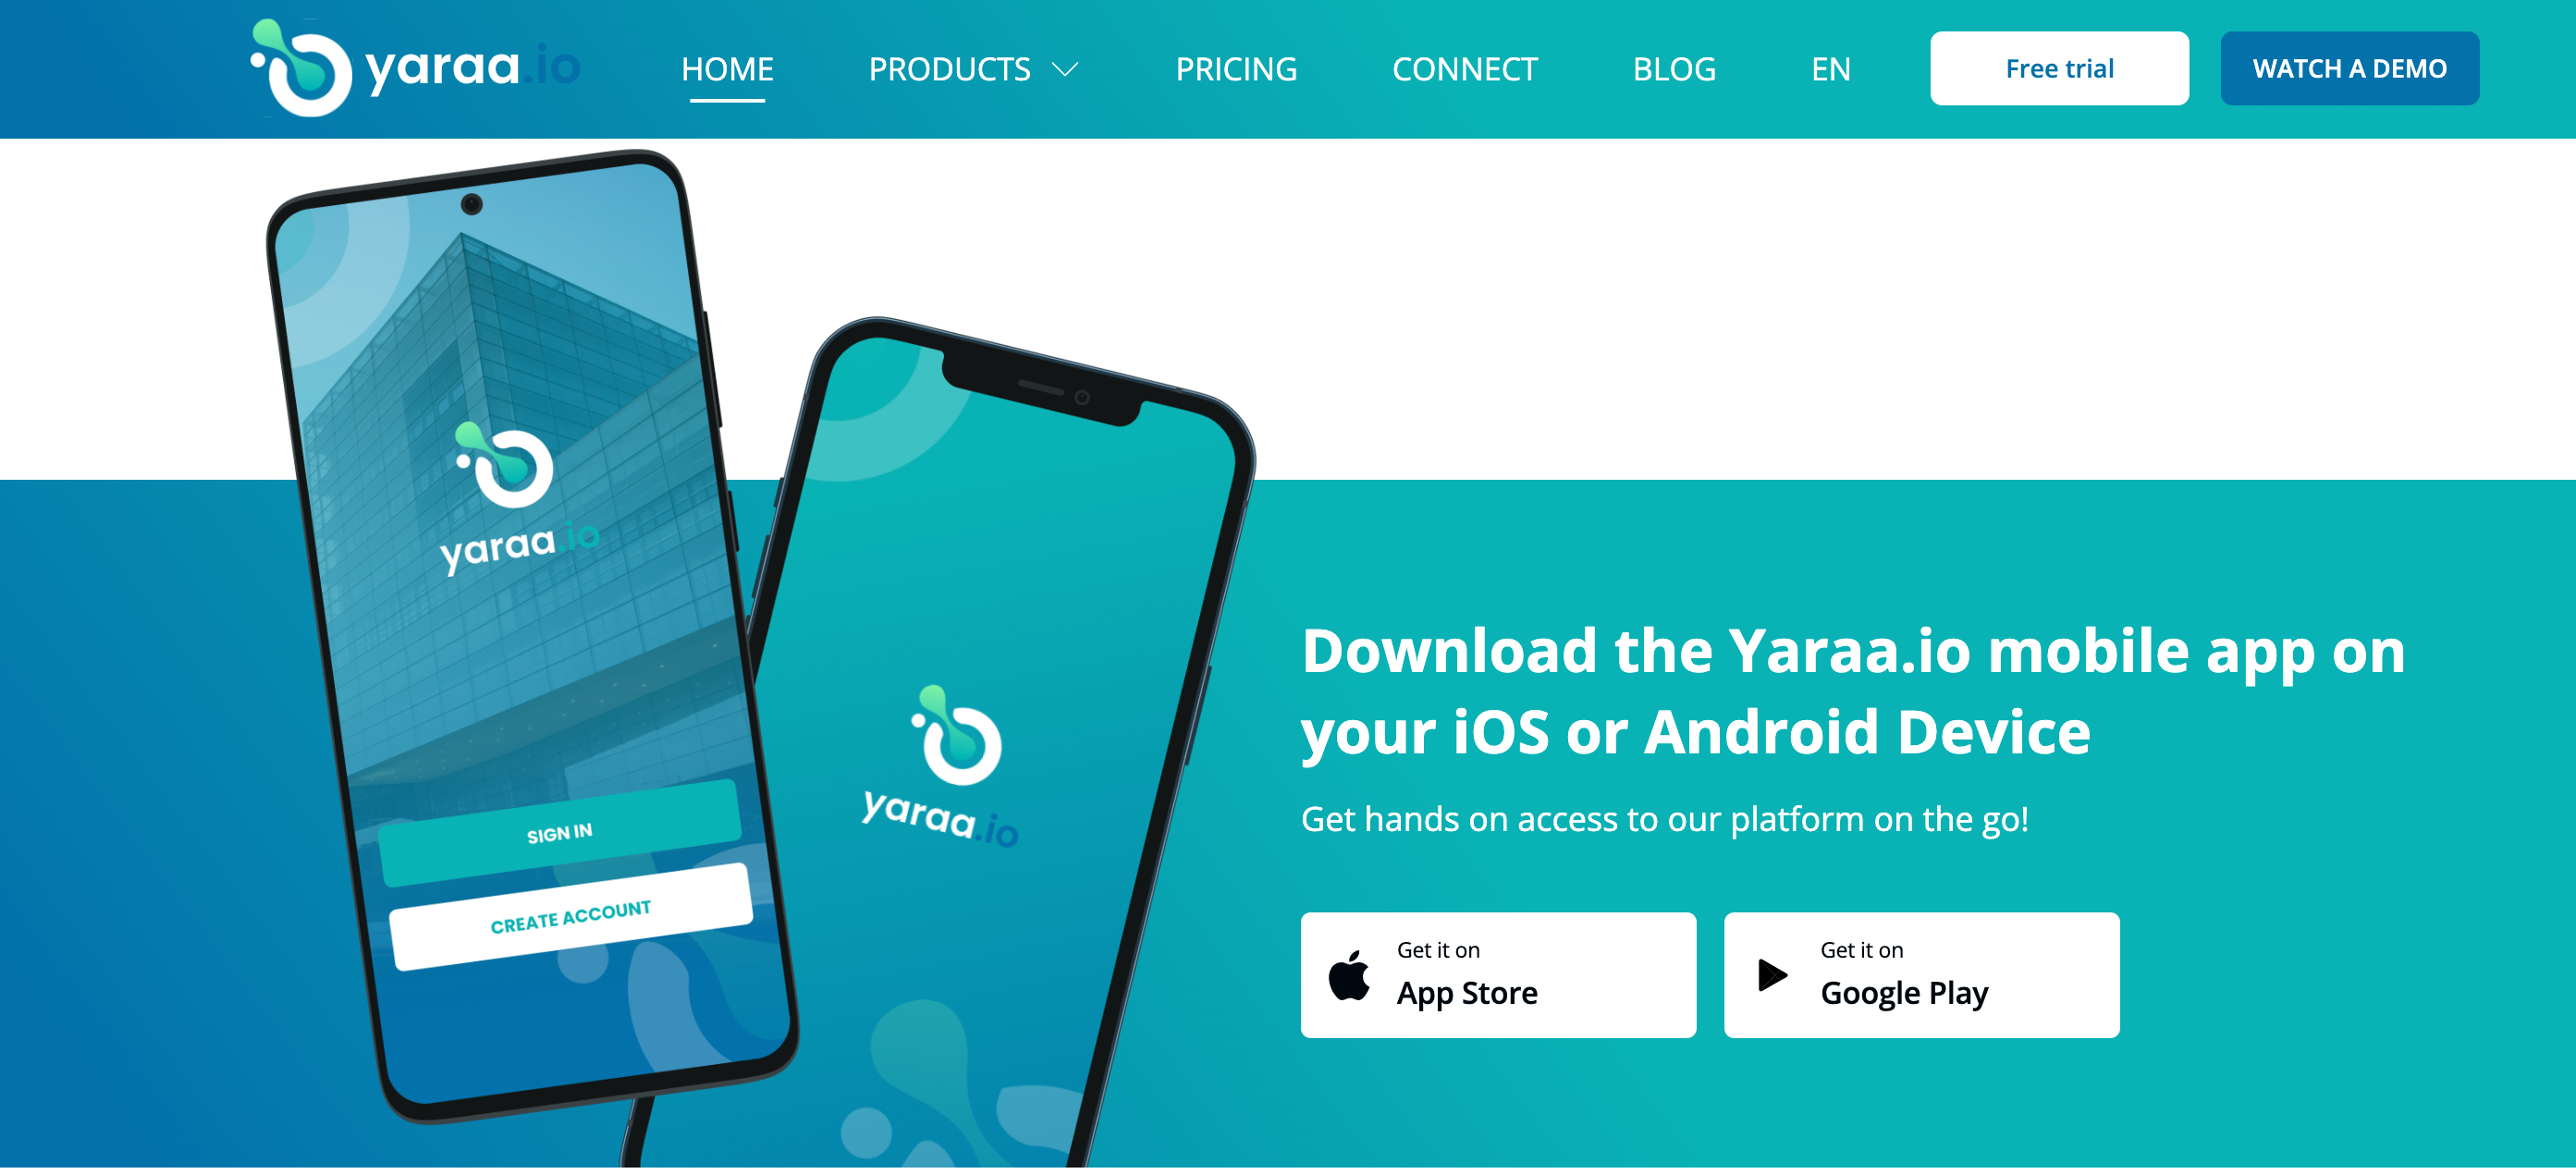 yaraa mobile app section image